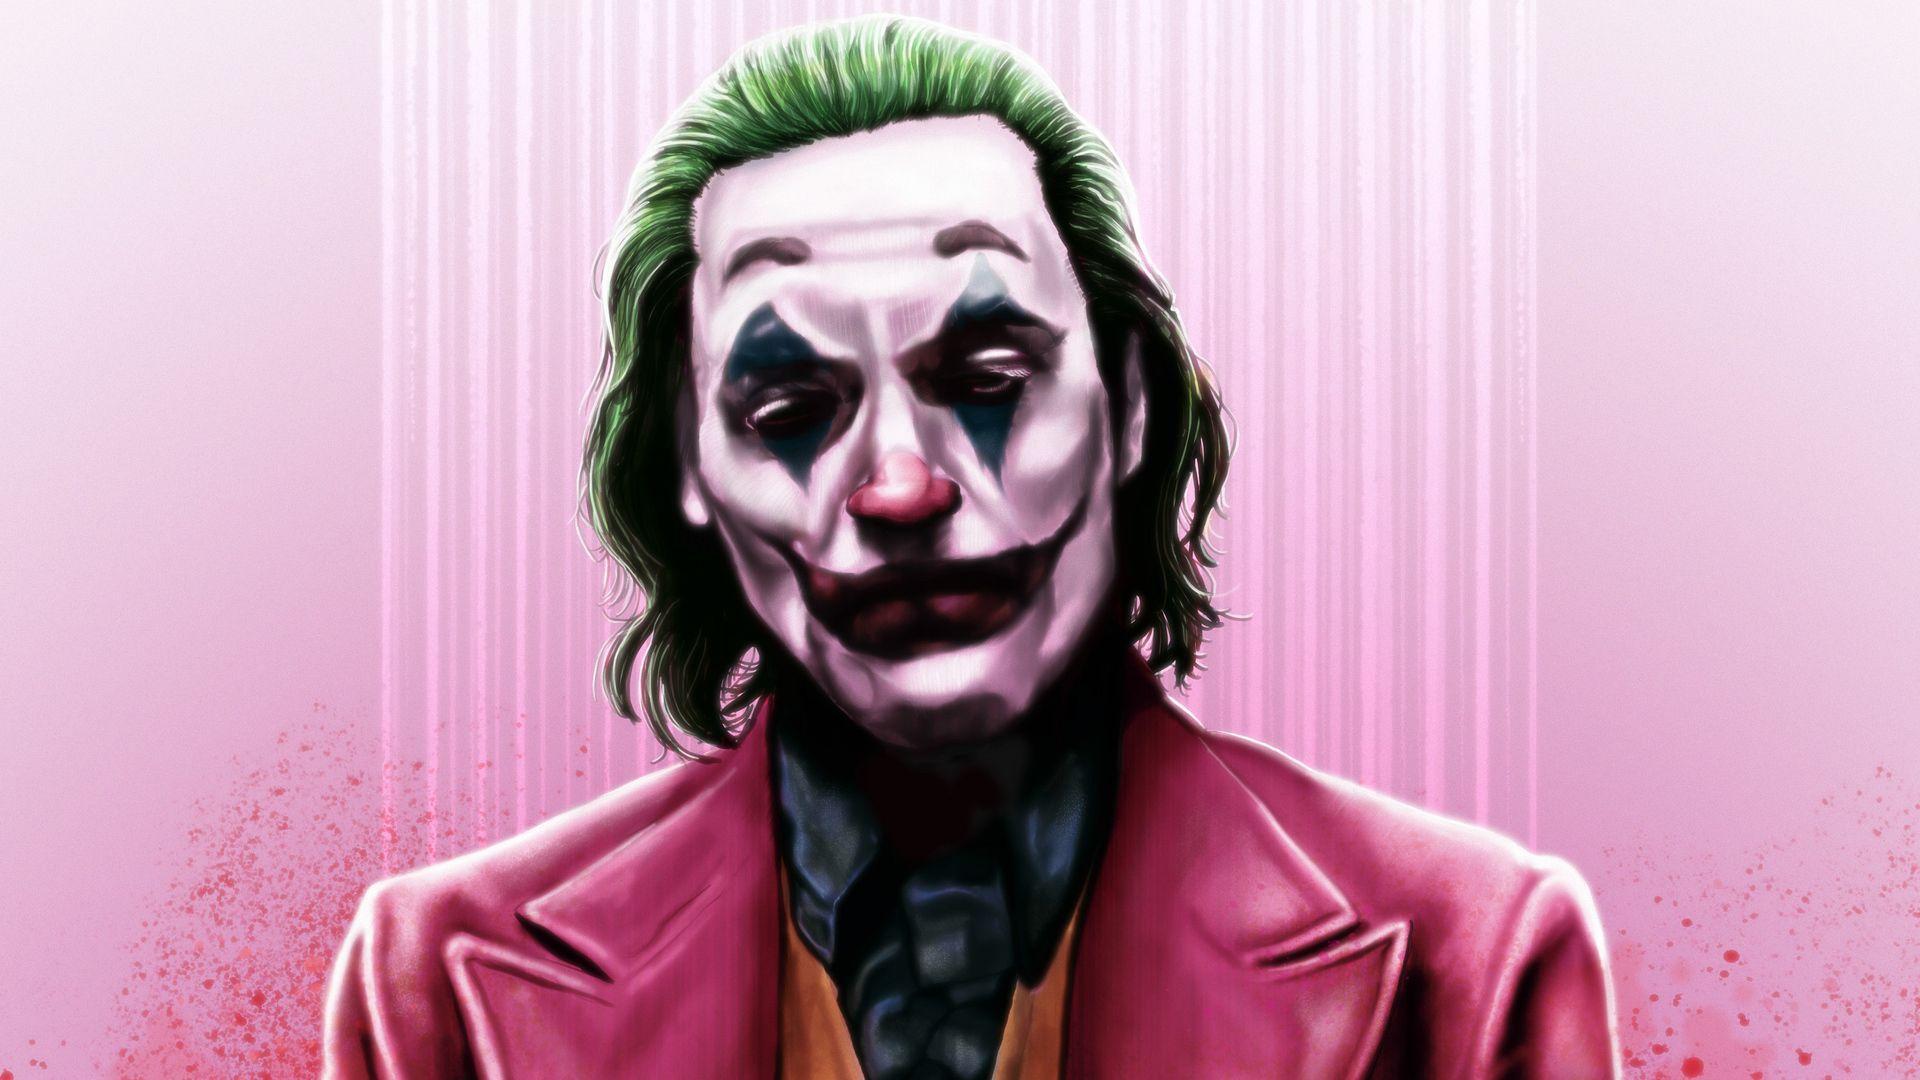 Joker 1920x1080 Wallpapers - Top Free Joker 1920x1080 Backgrounds ...